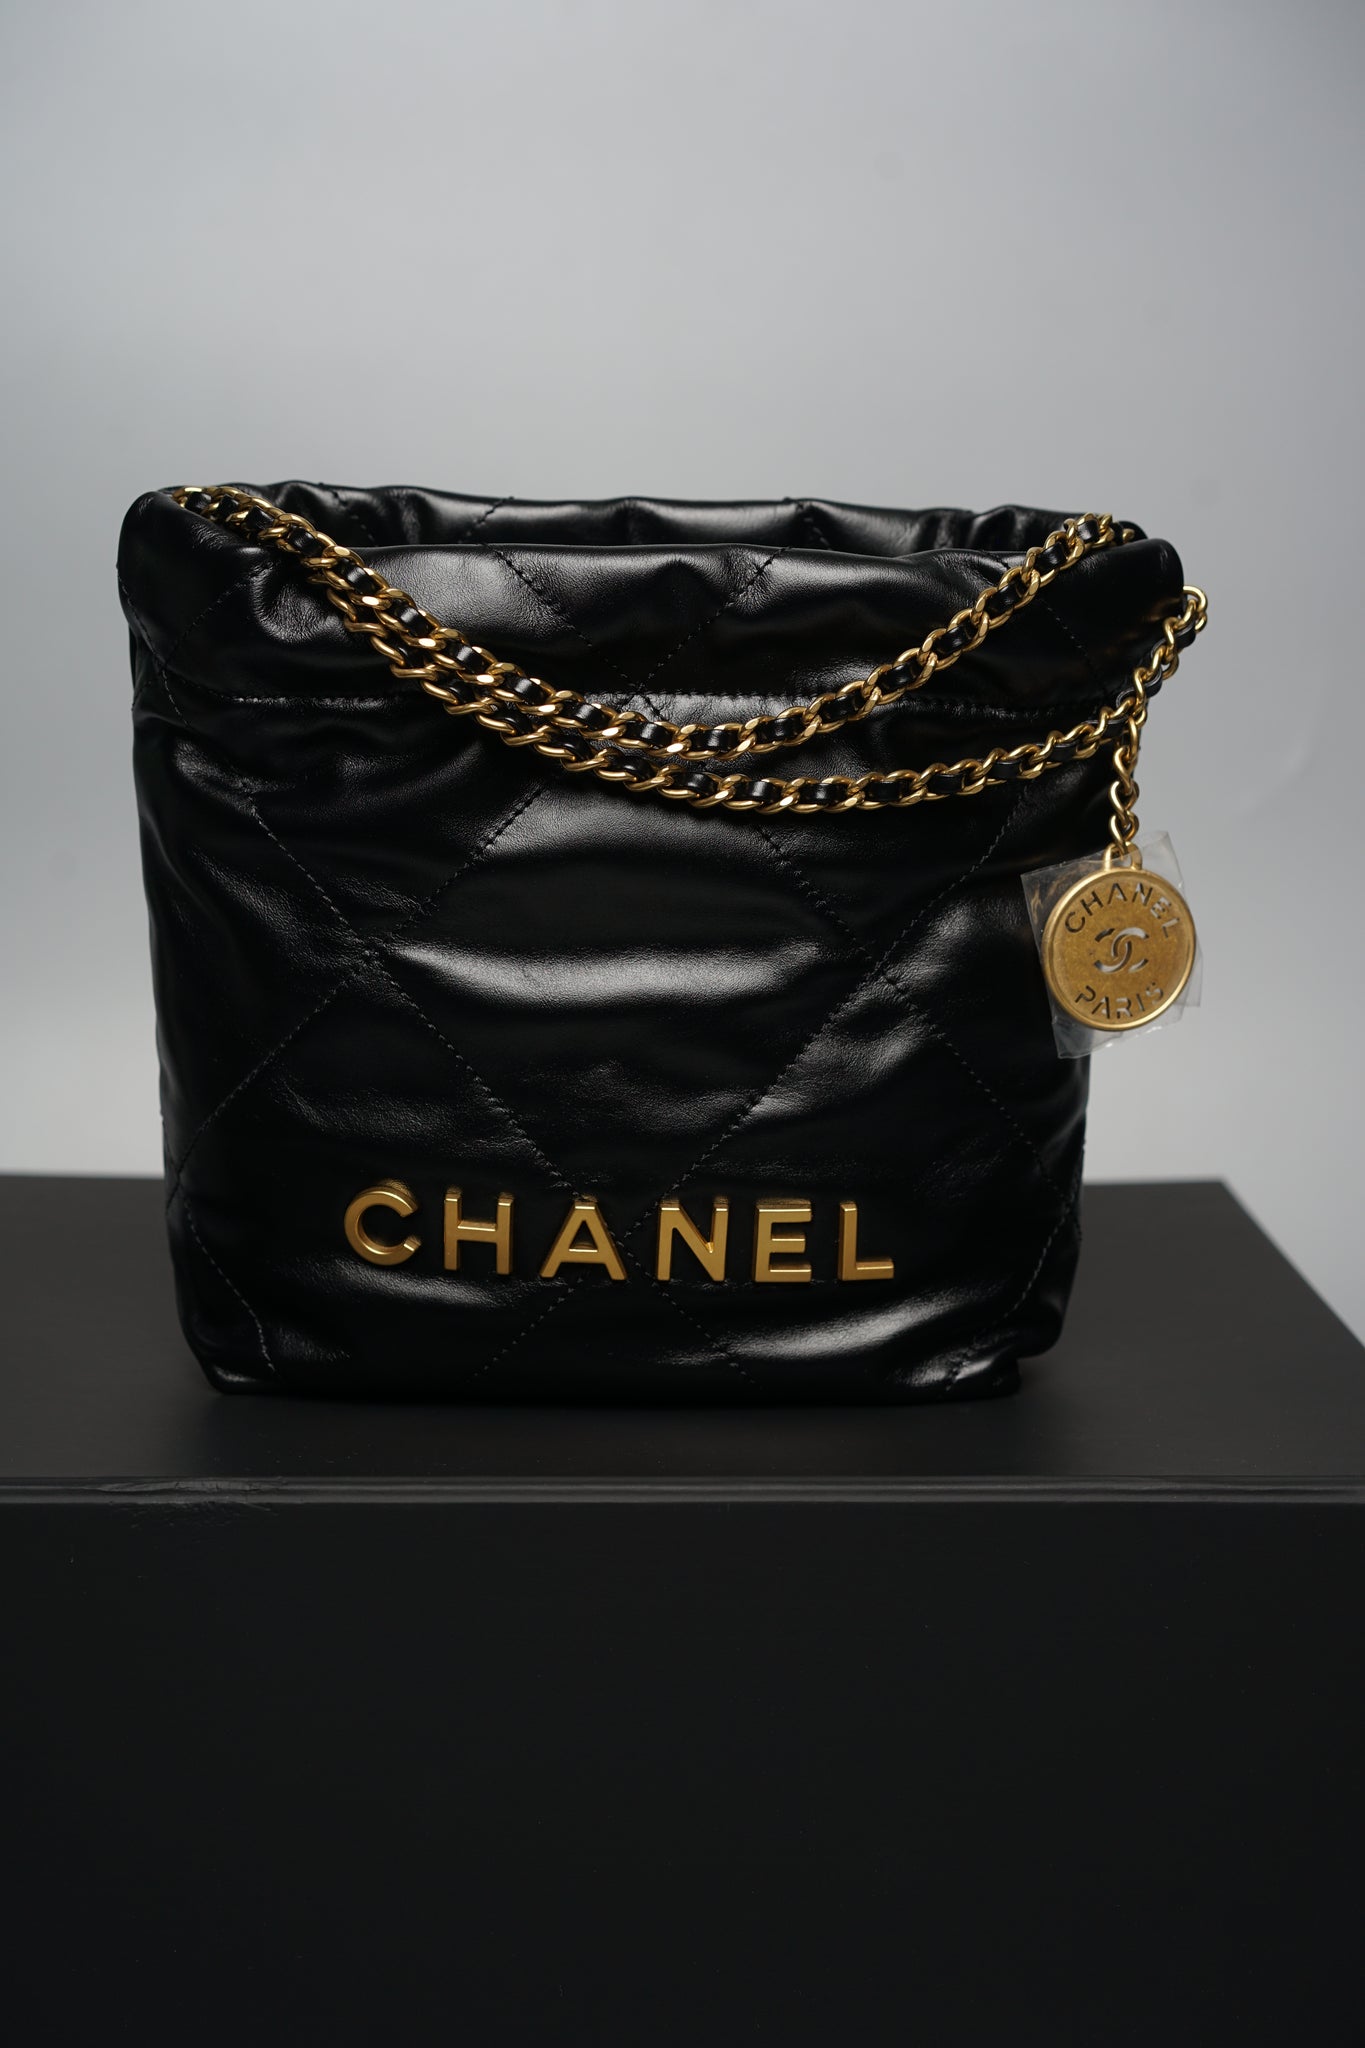 Chanel 22 Mini in Black Calfskin Bghw (Brand New)